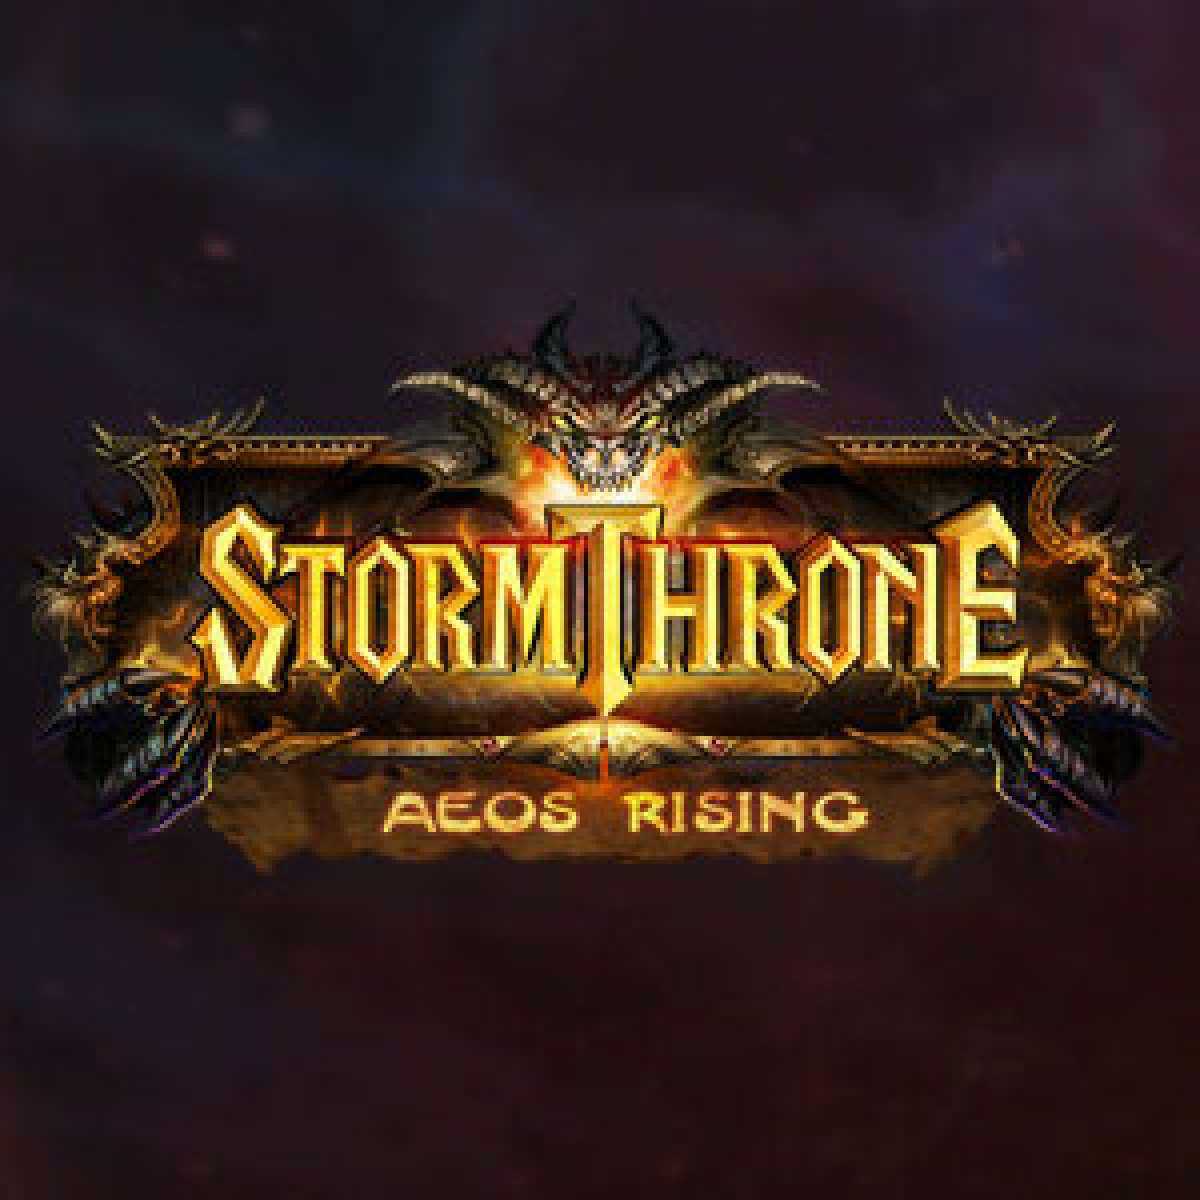 Stormthrone: Aeos Rising